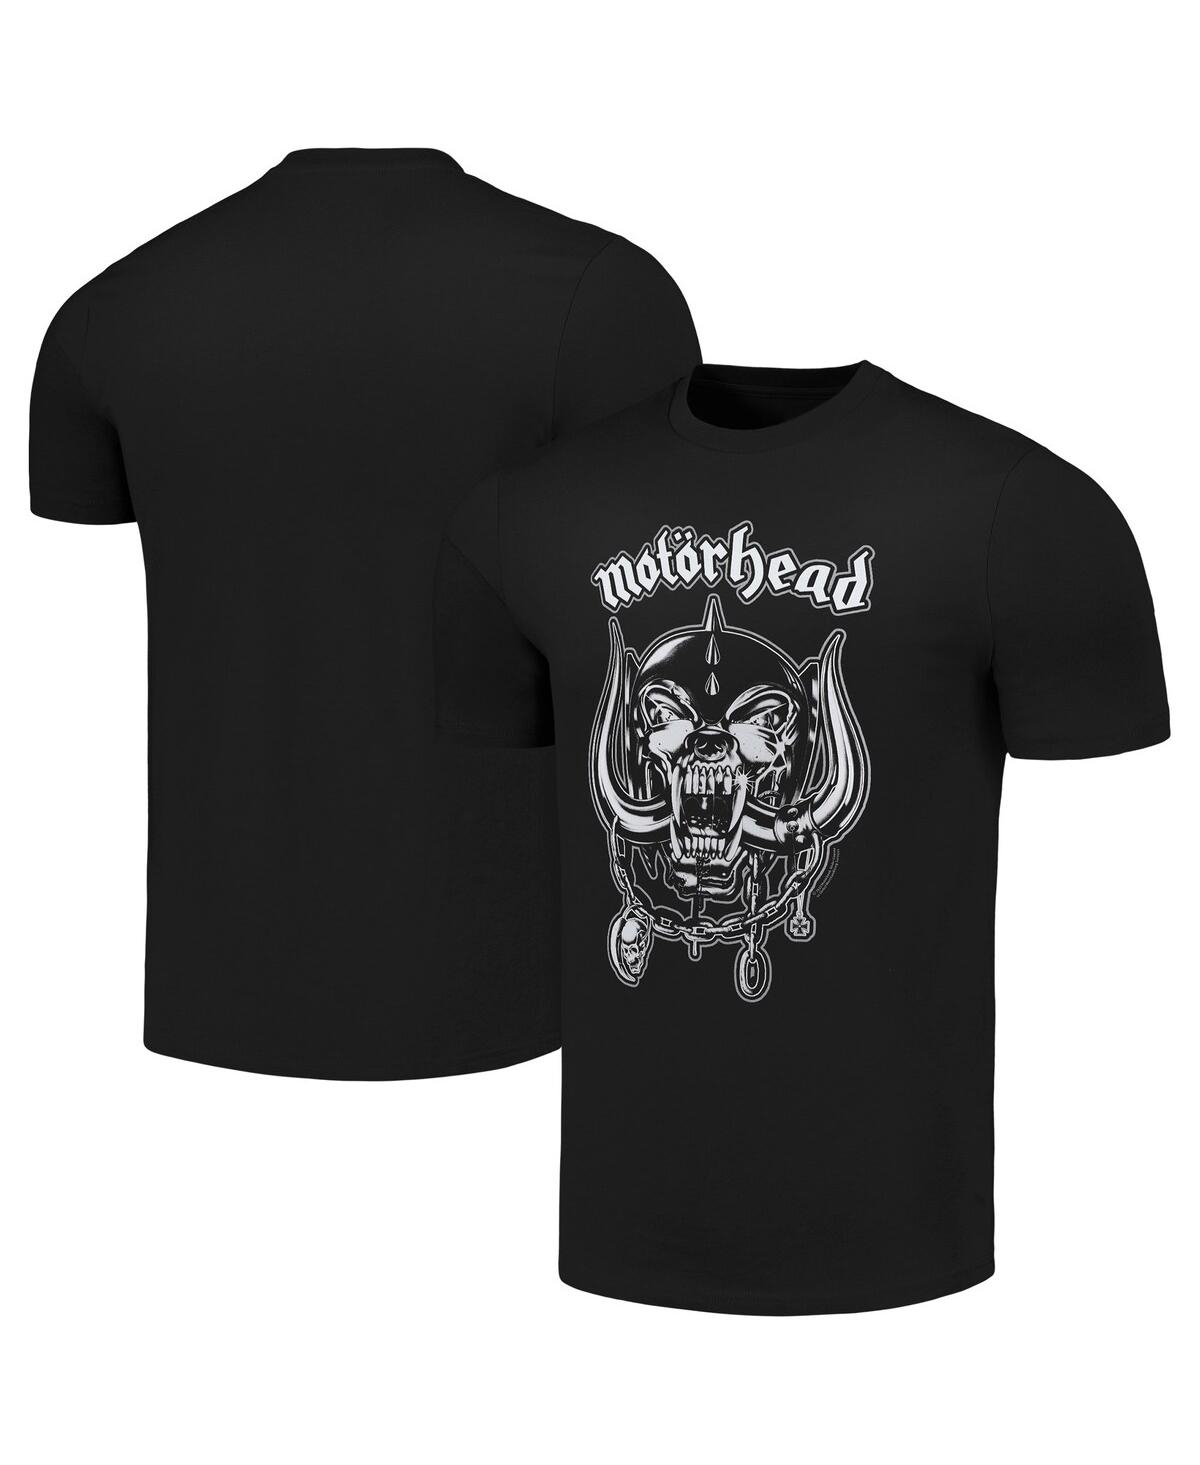 Men's Black Motorhead Snaggletooth T-shirt - Black